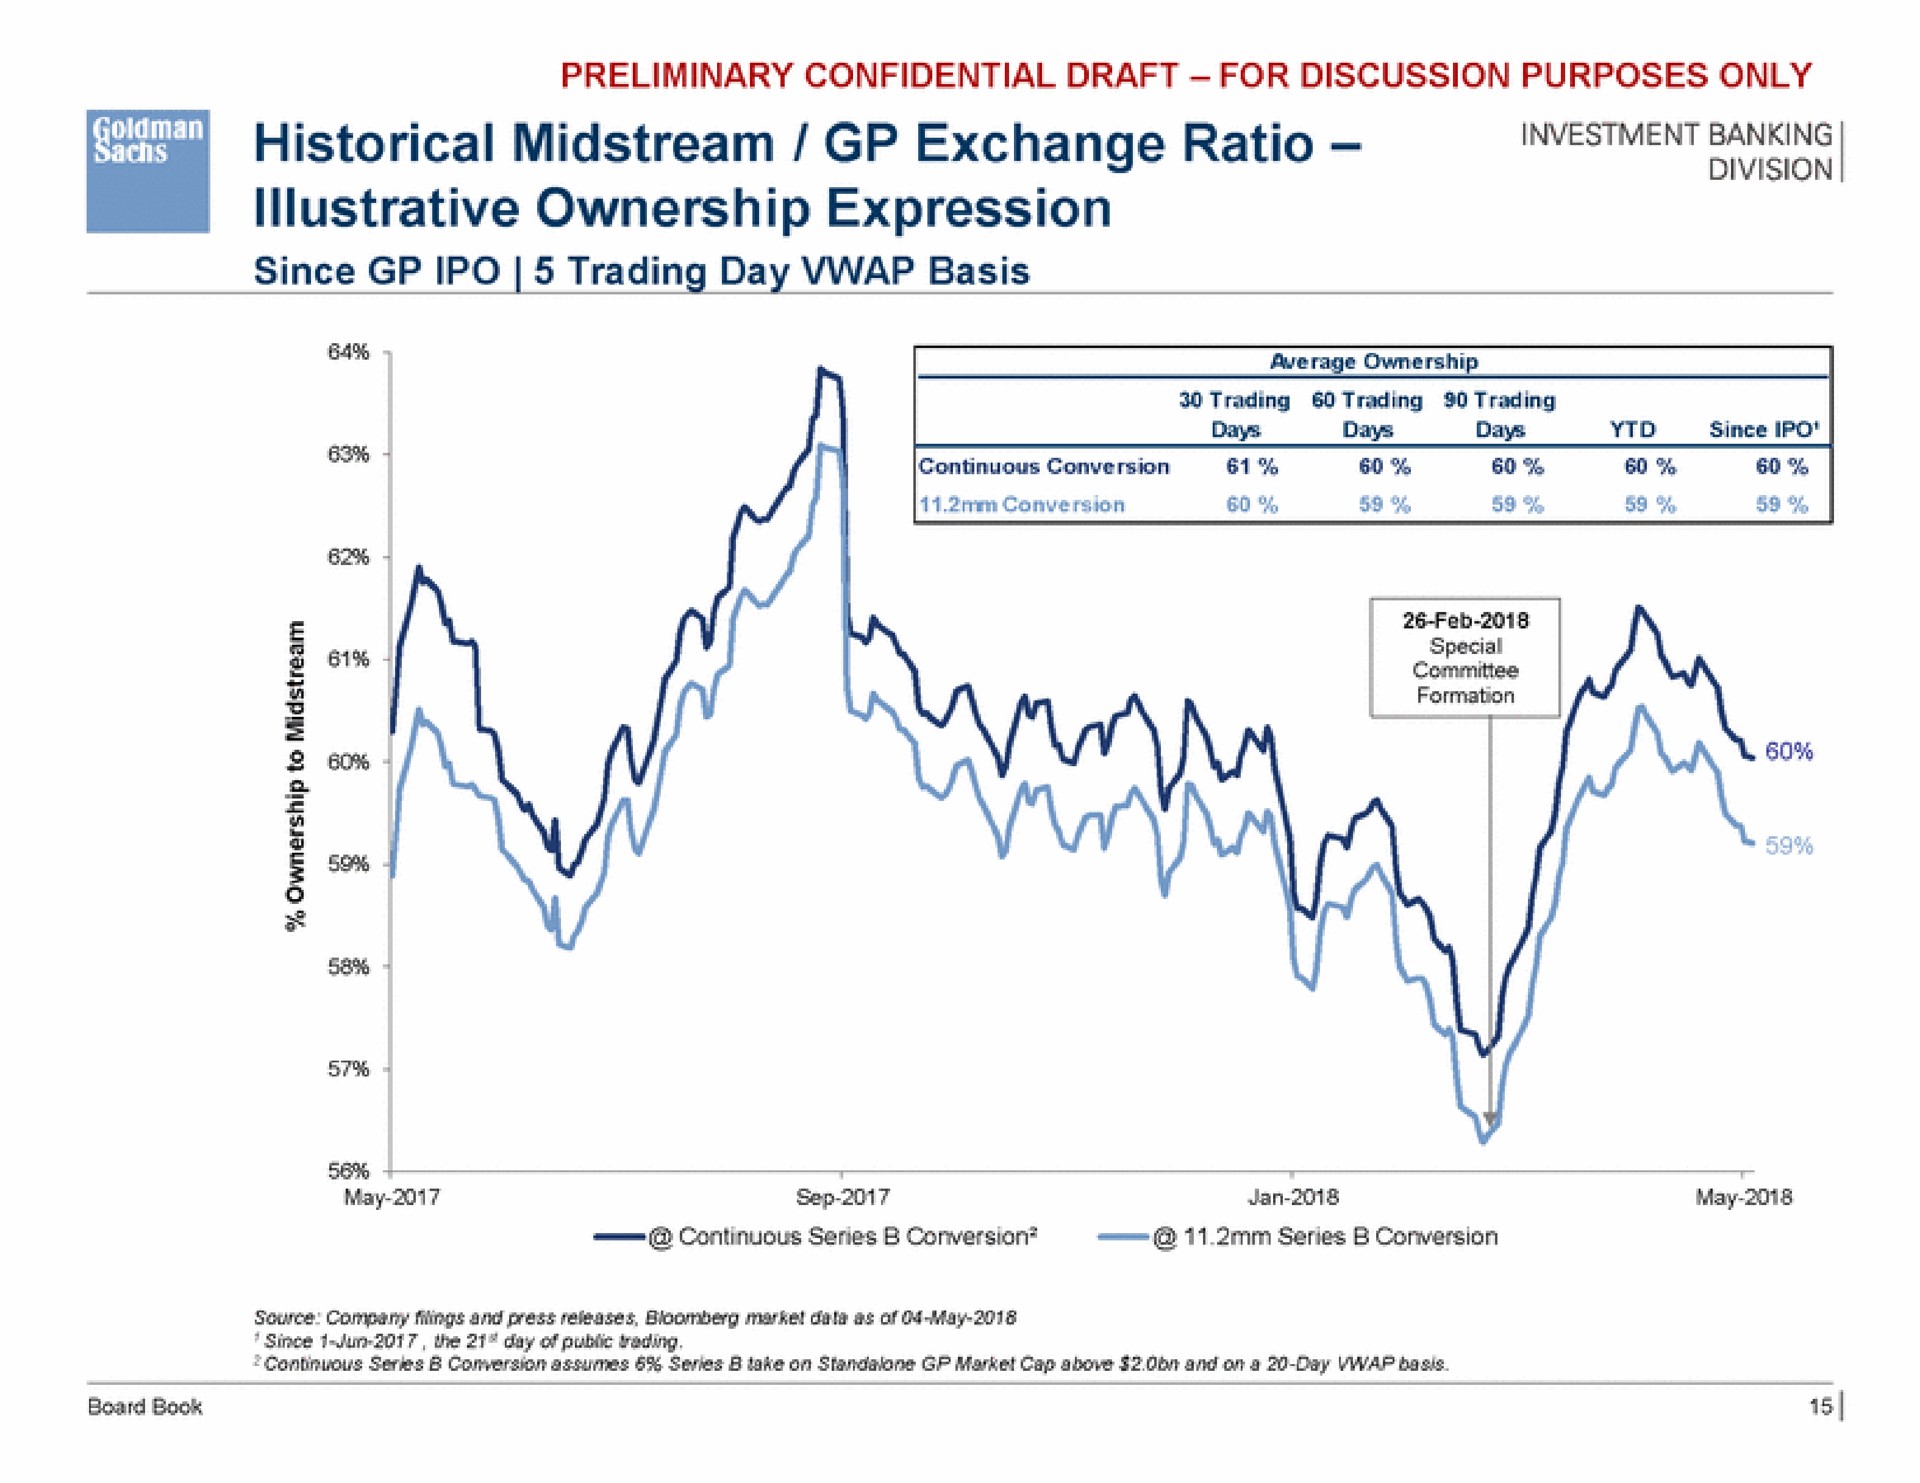 historical midstream exchange ratio illustrative ownership expression | Goldman Sachs